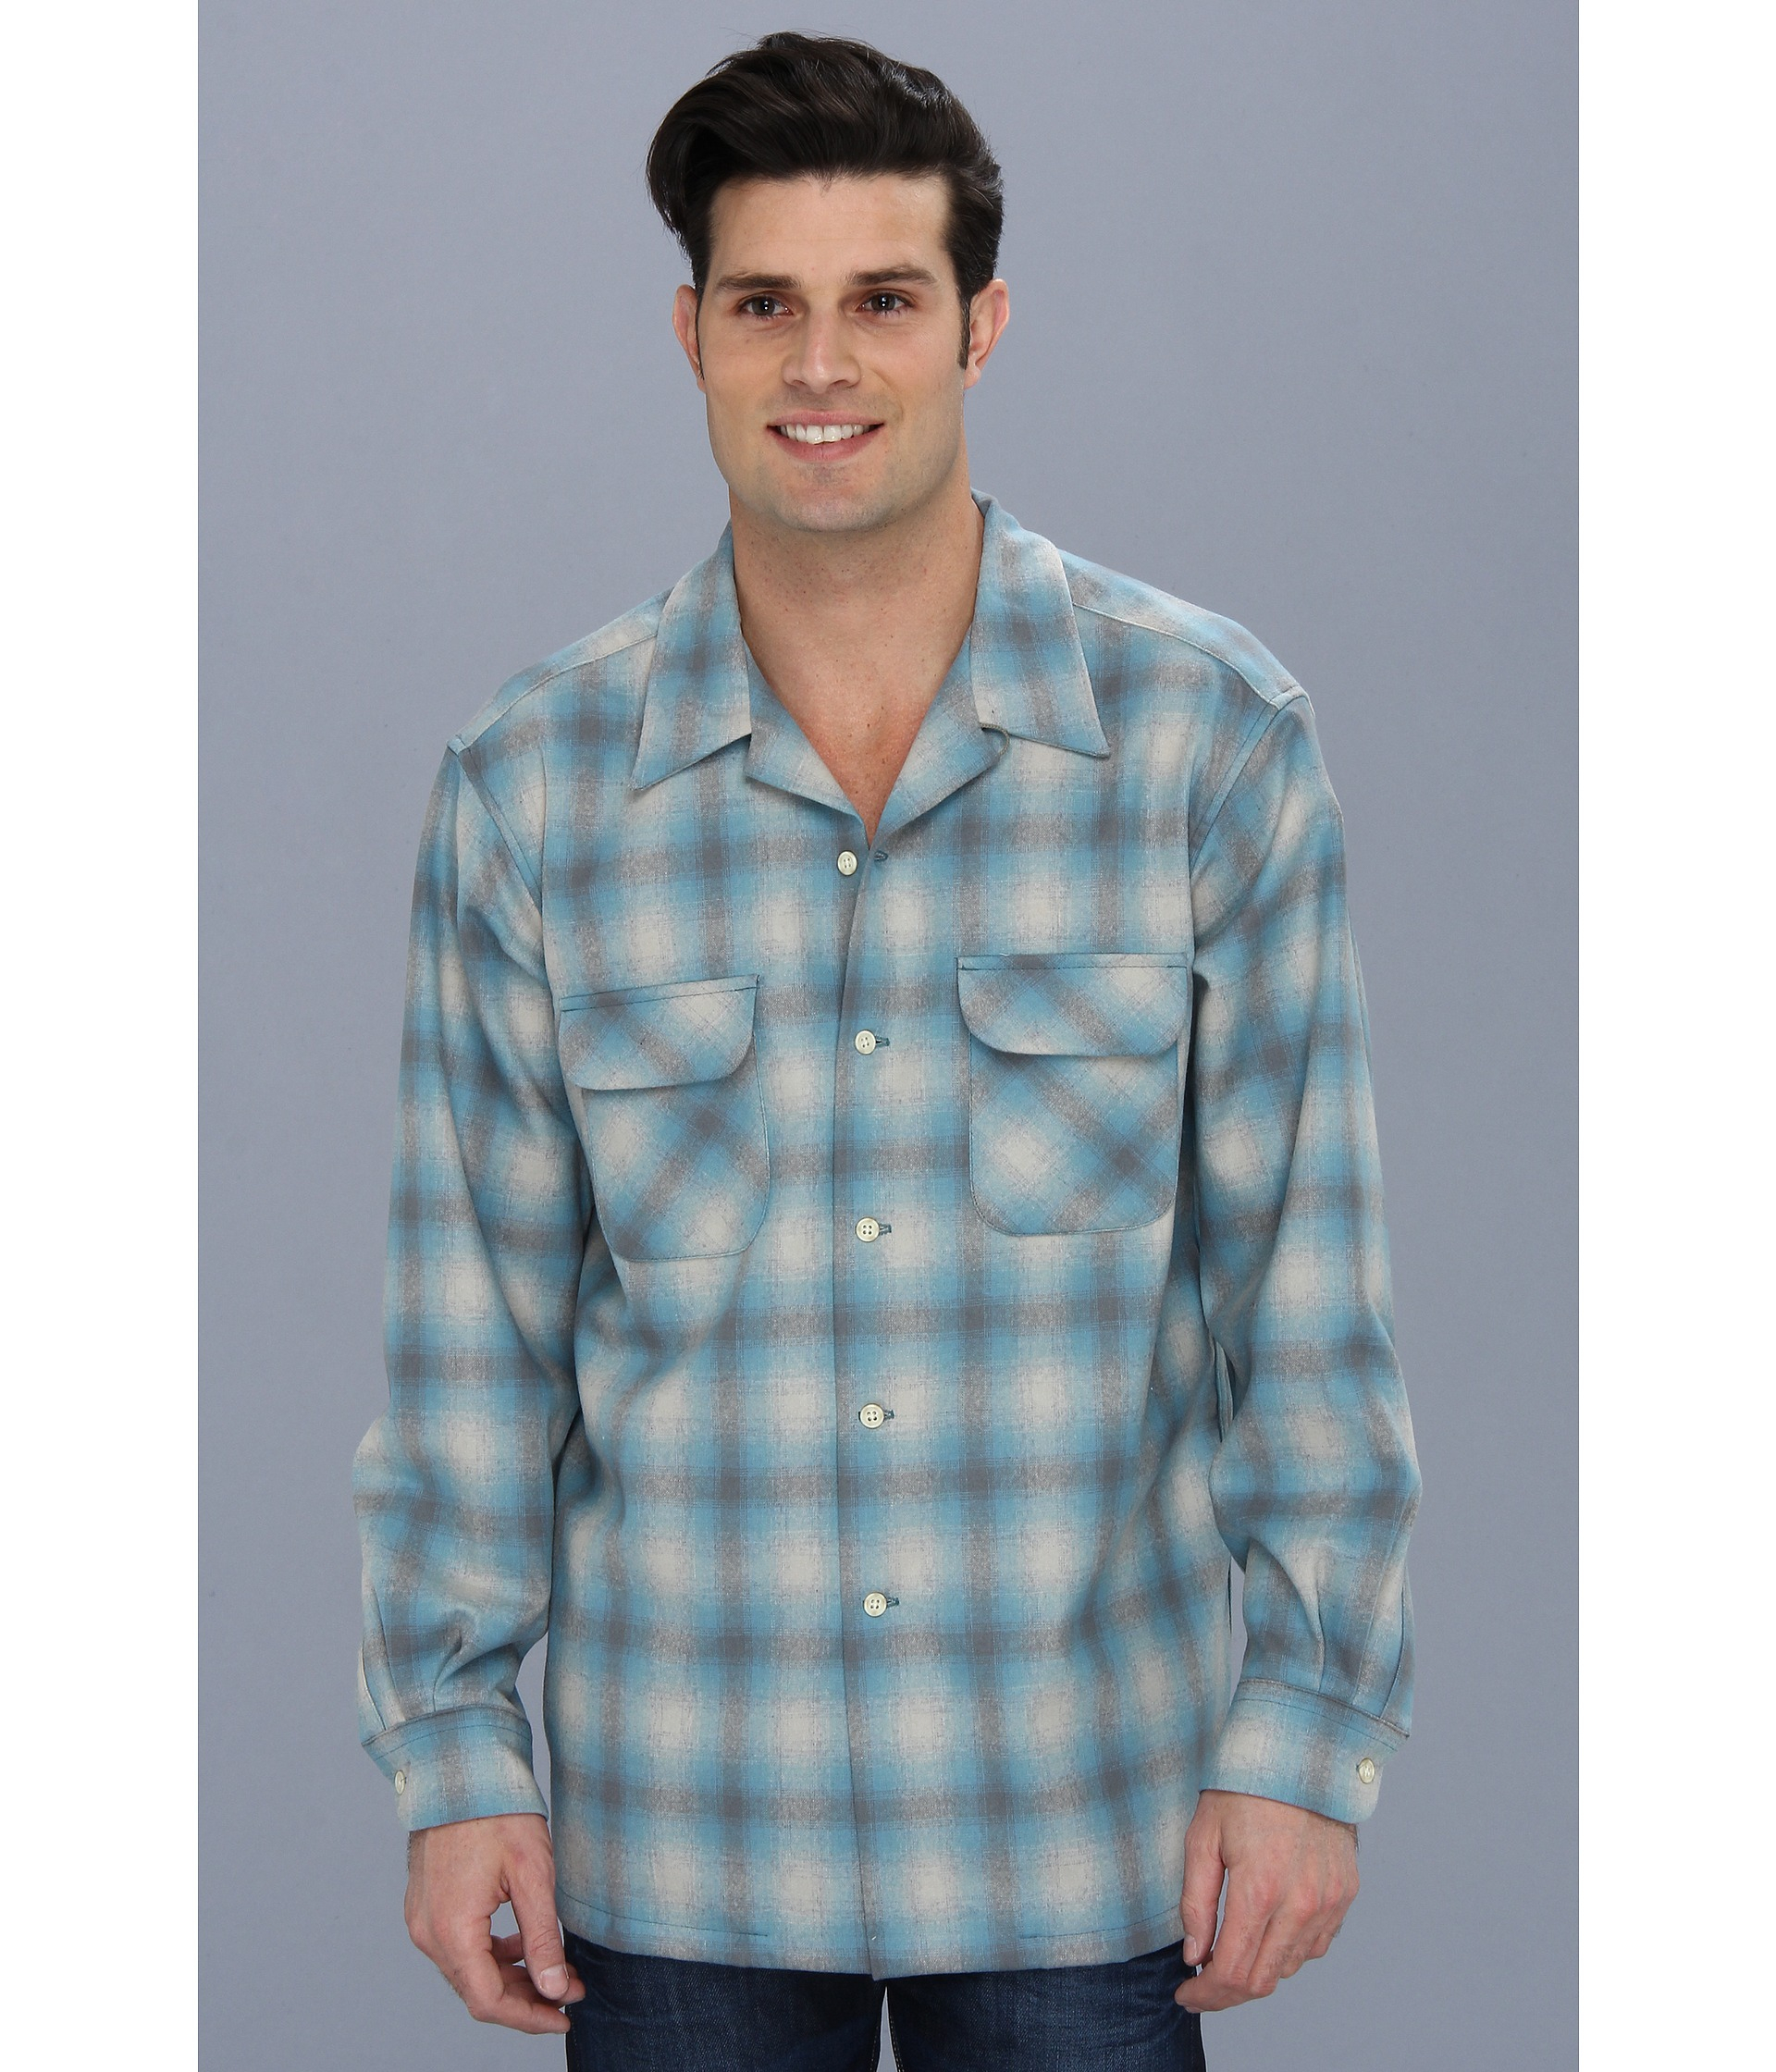 Blue Gray Ombré Nwt $170 Pendleton Men's Board Shirt Size 4XL Tall 